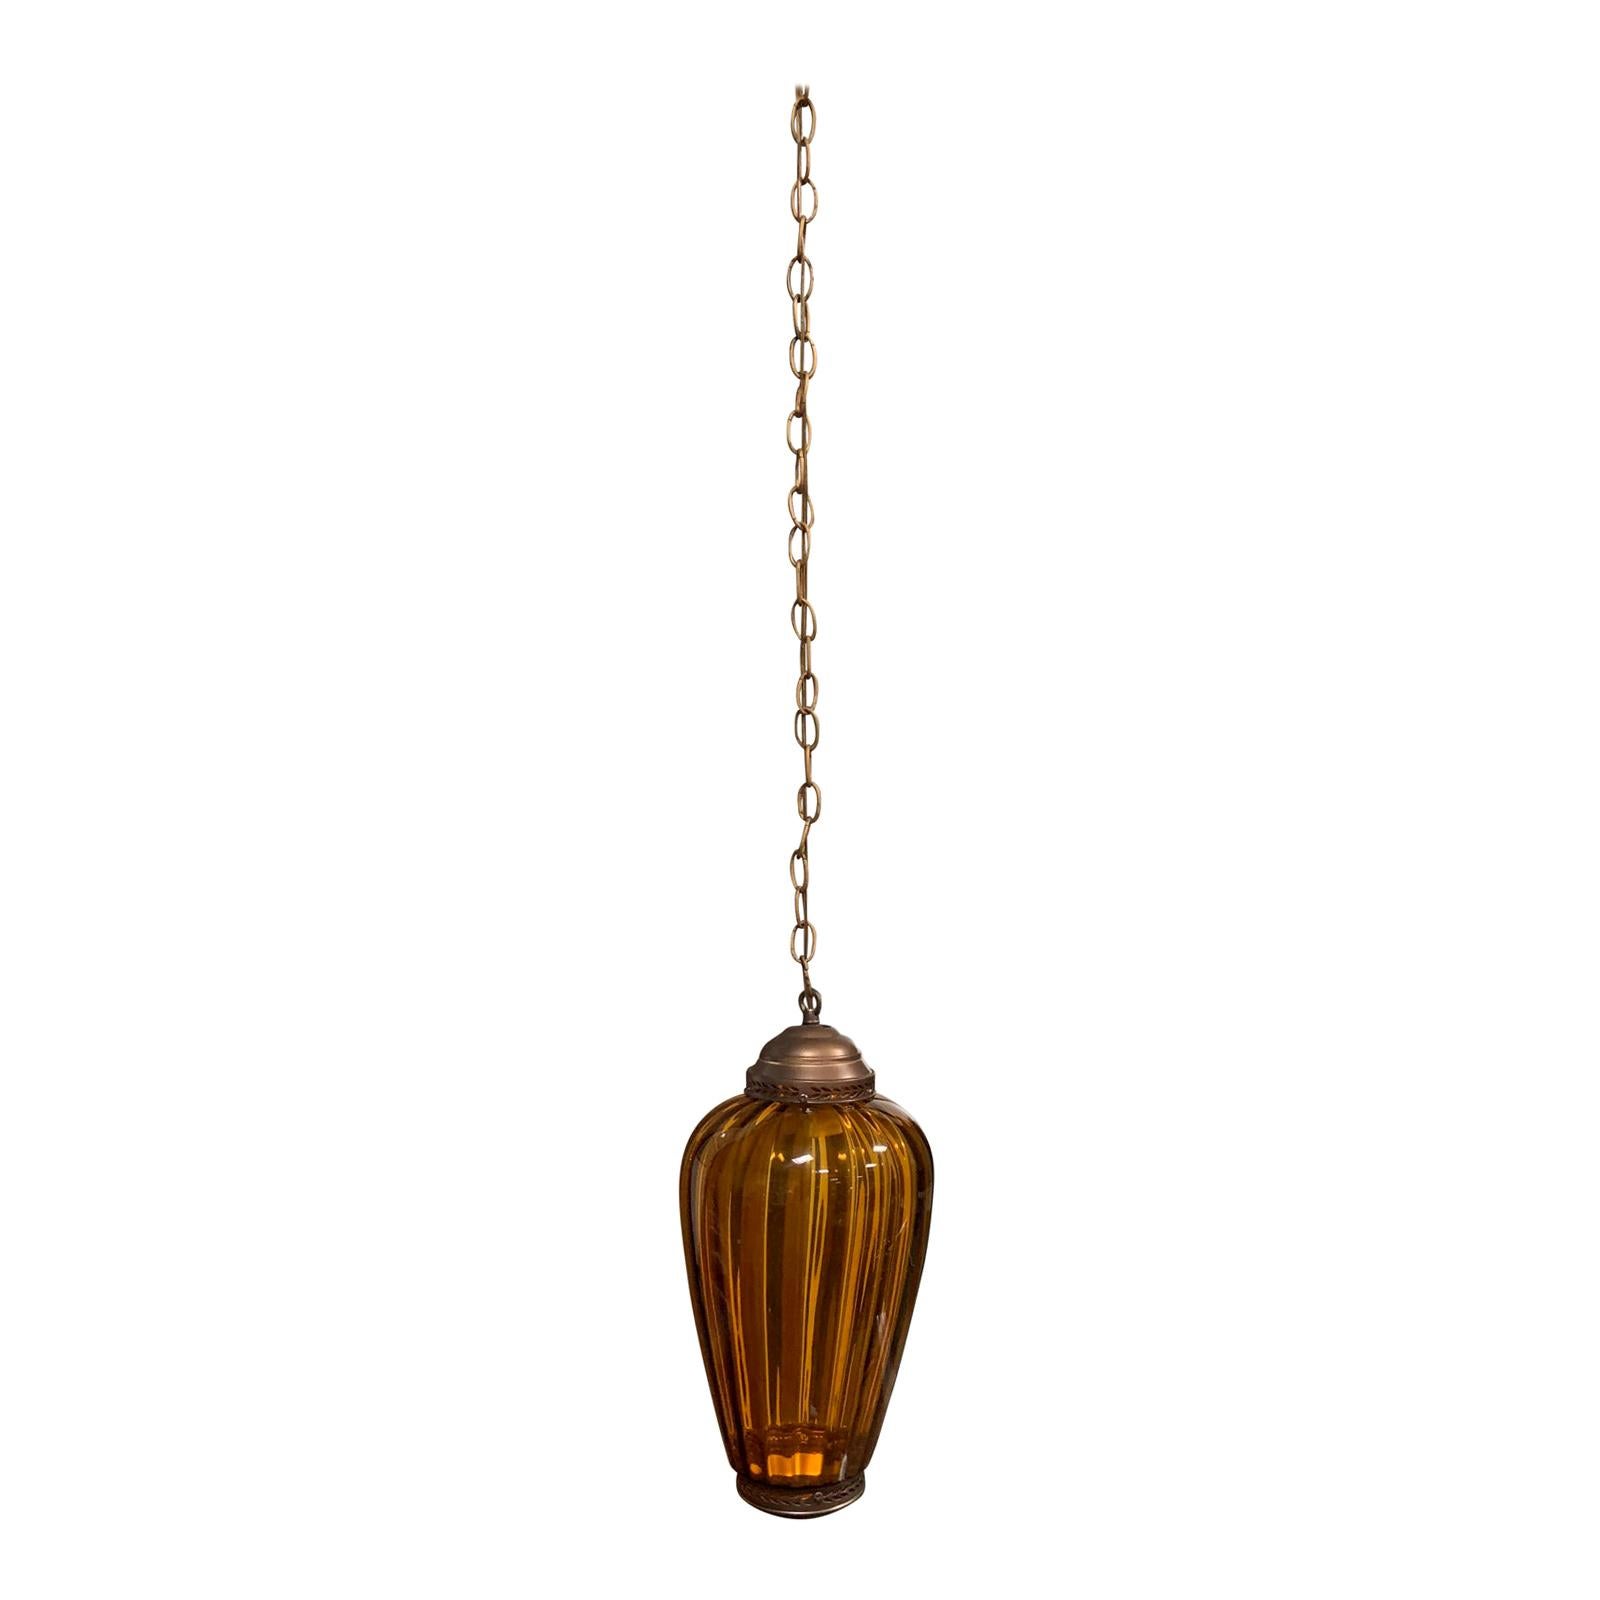 Amber Glass Oblong Hanging Pendant